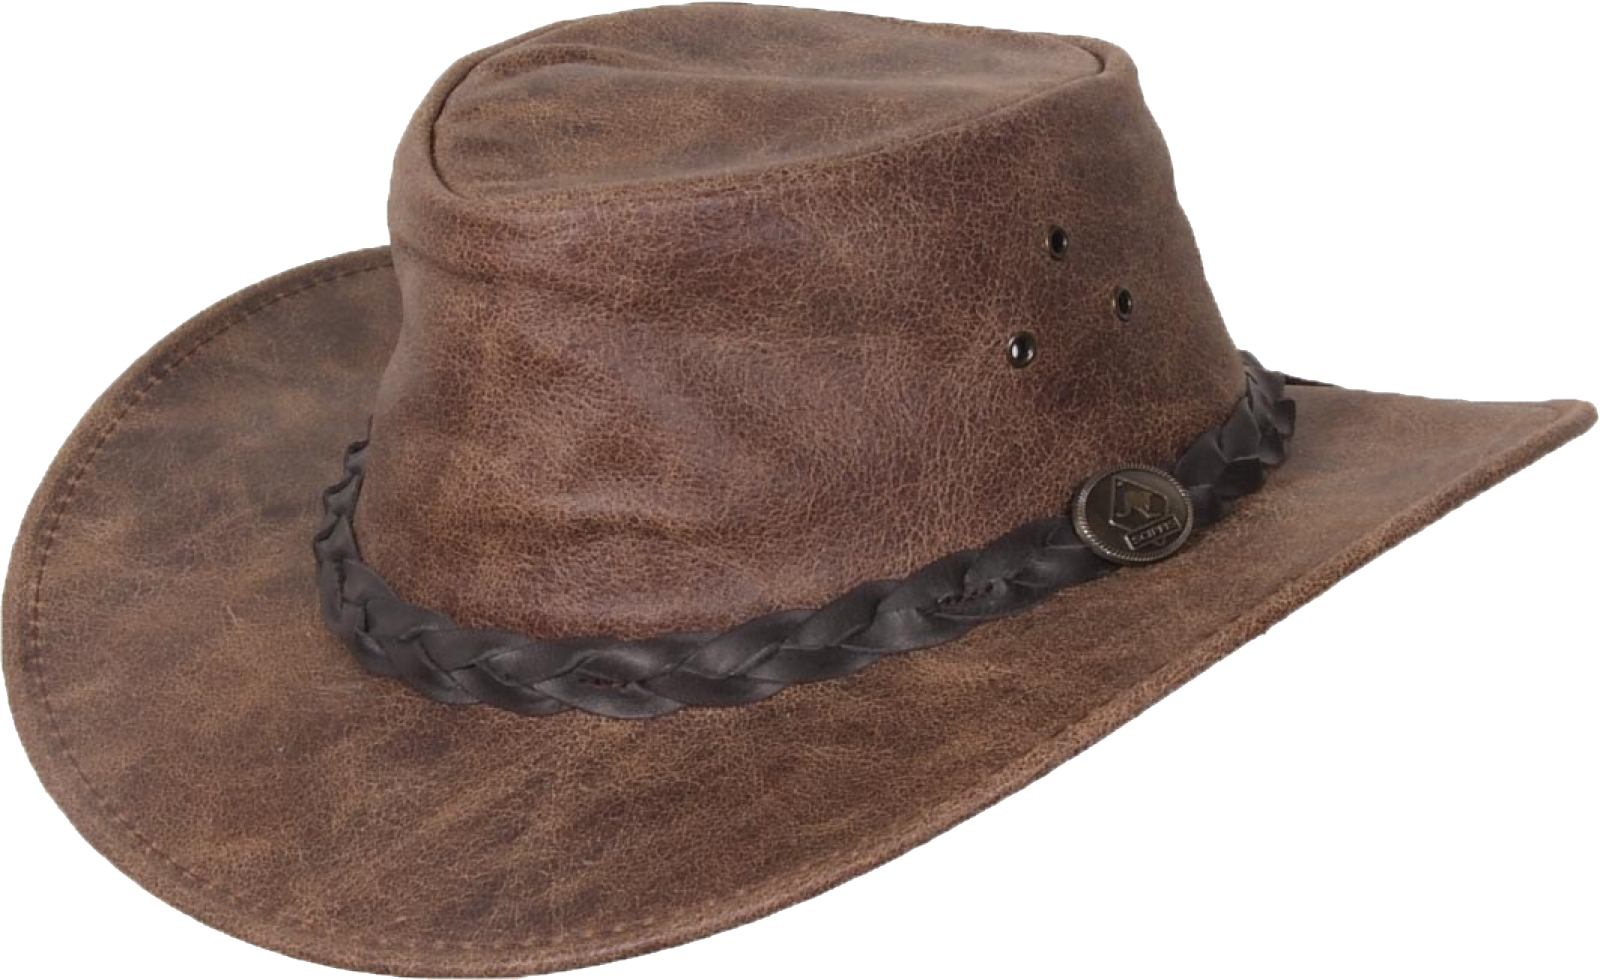 Дикая шляпа. Джон Стетсон шляпа. Ковбойская шляпа Stetson. Кожаная шляпа Stetson. Ковбойская кожаная шляпа Стетсон.